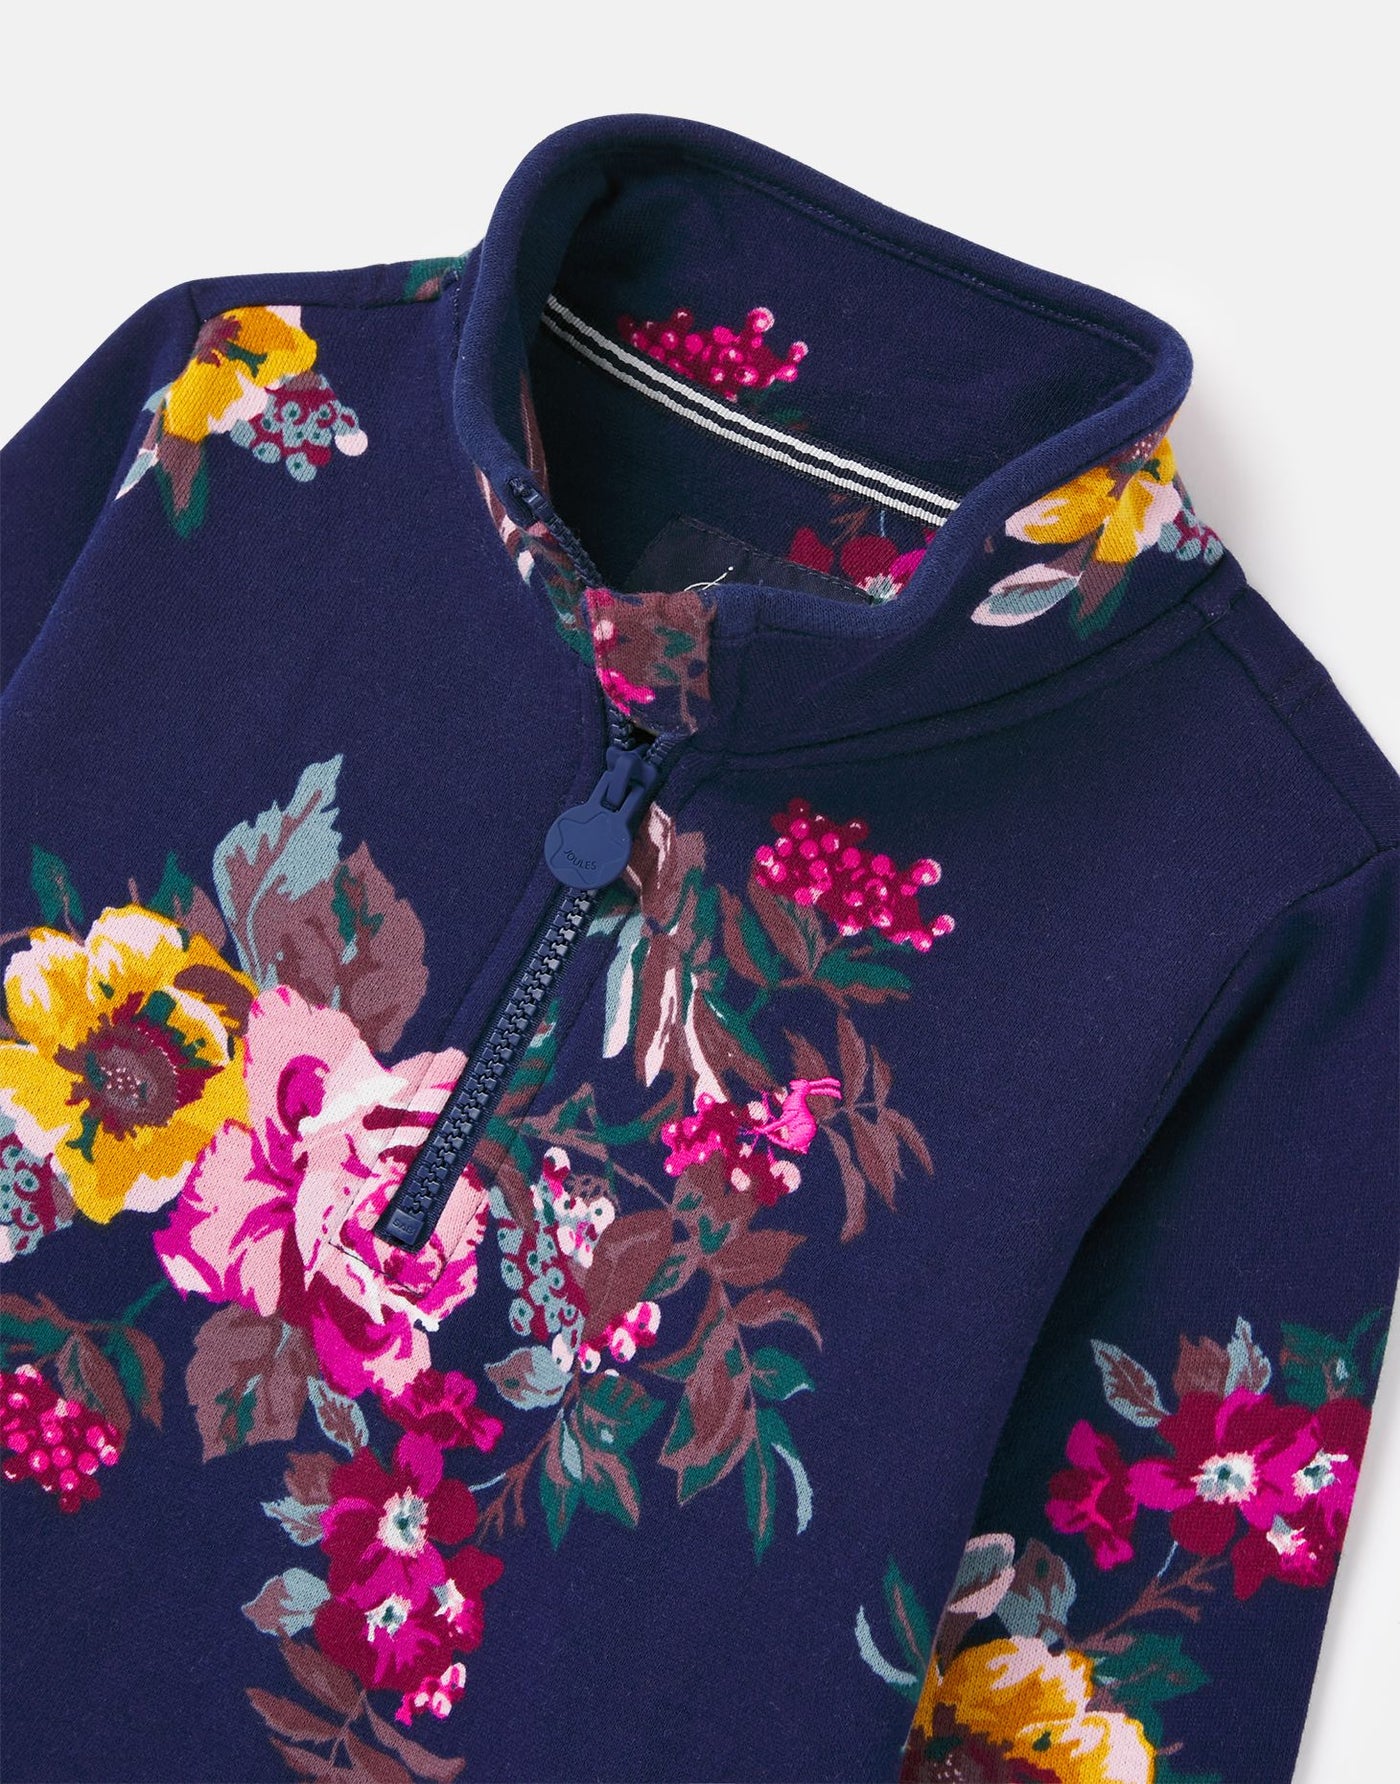 Fairdale Sweatshirt in Navy Floral